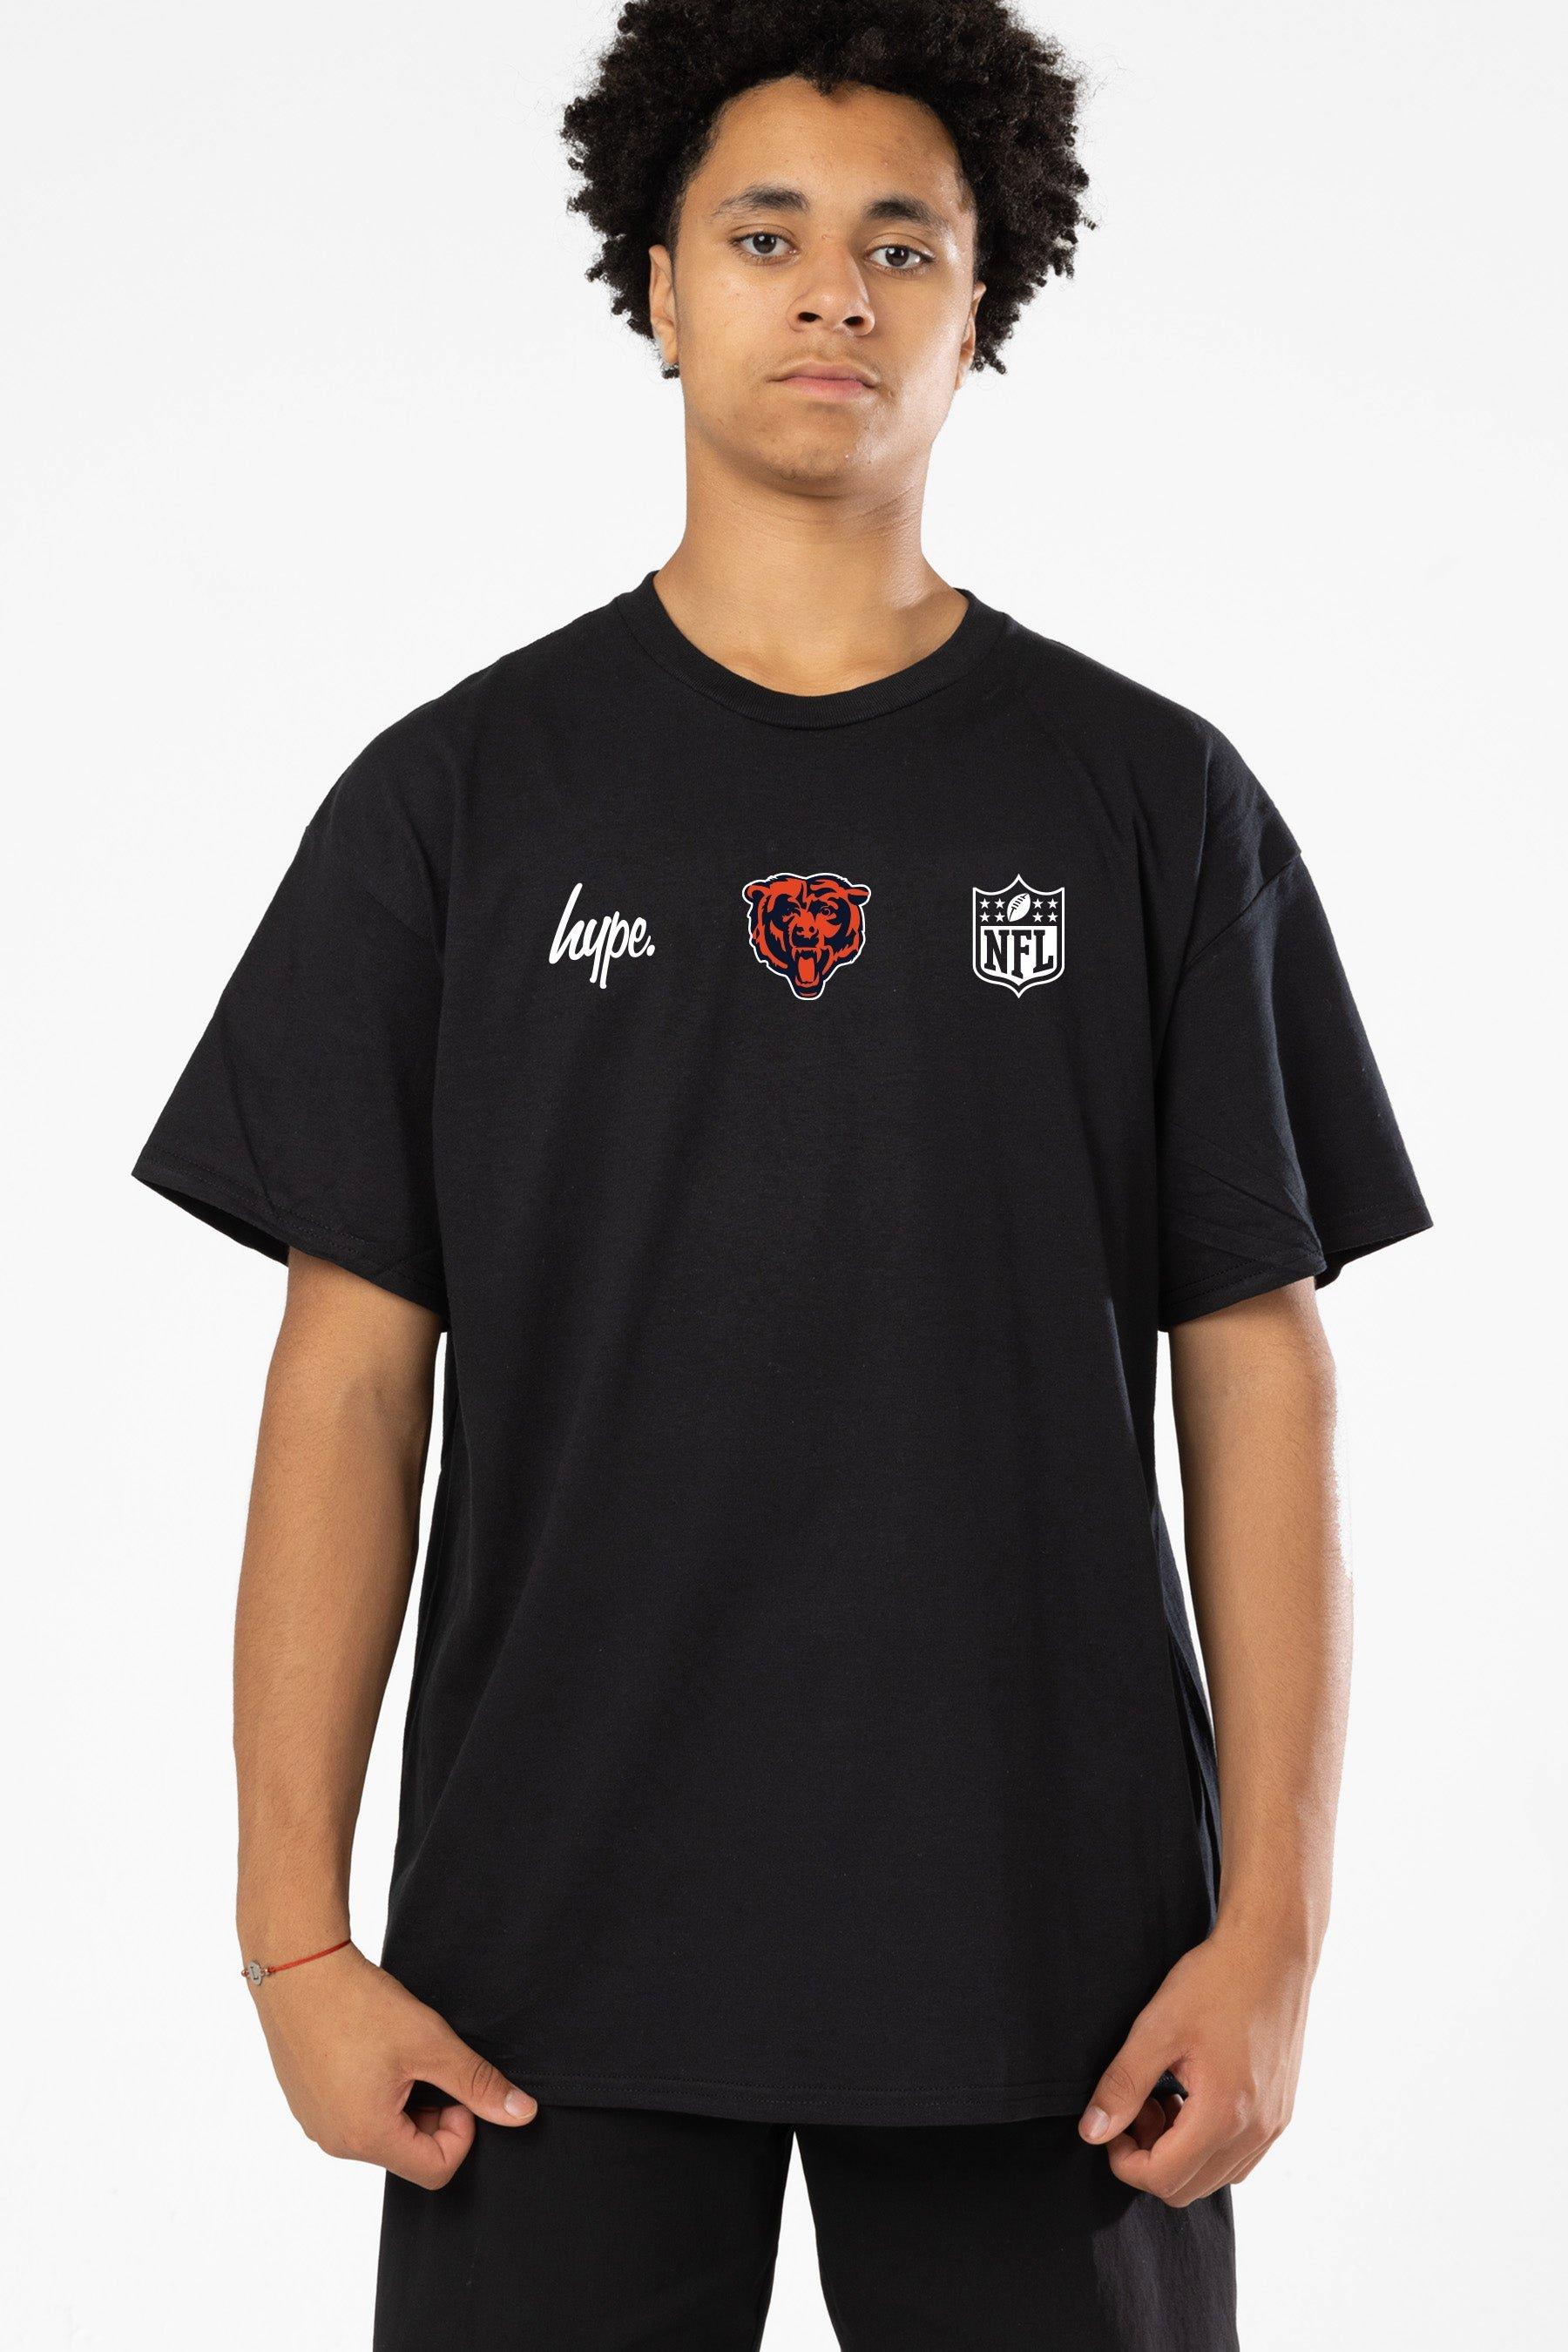 NFL X Chicago Bears T-Shirt